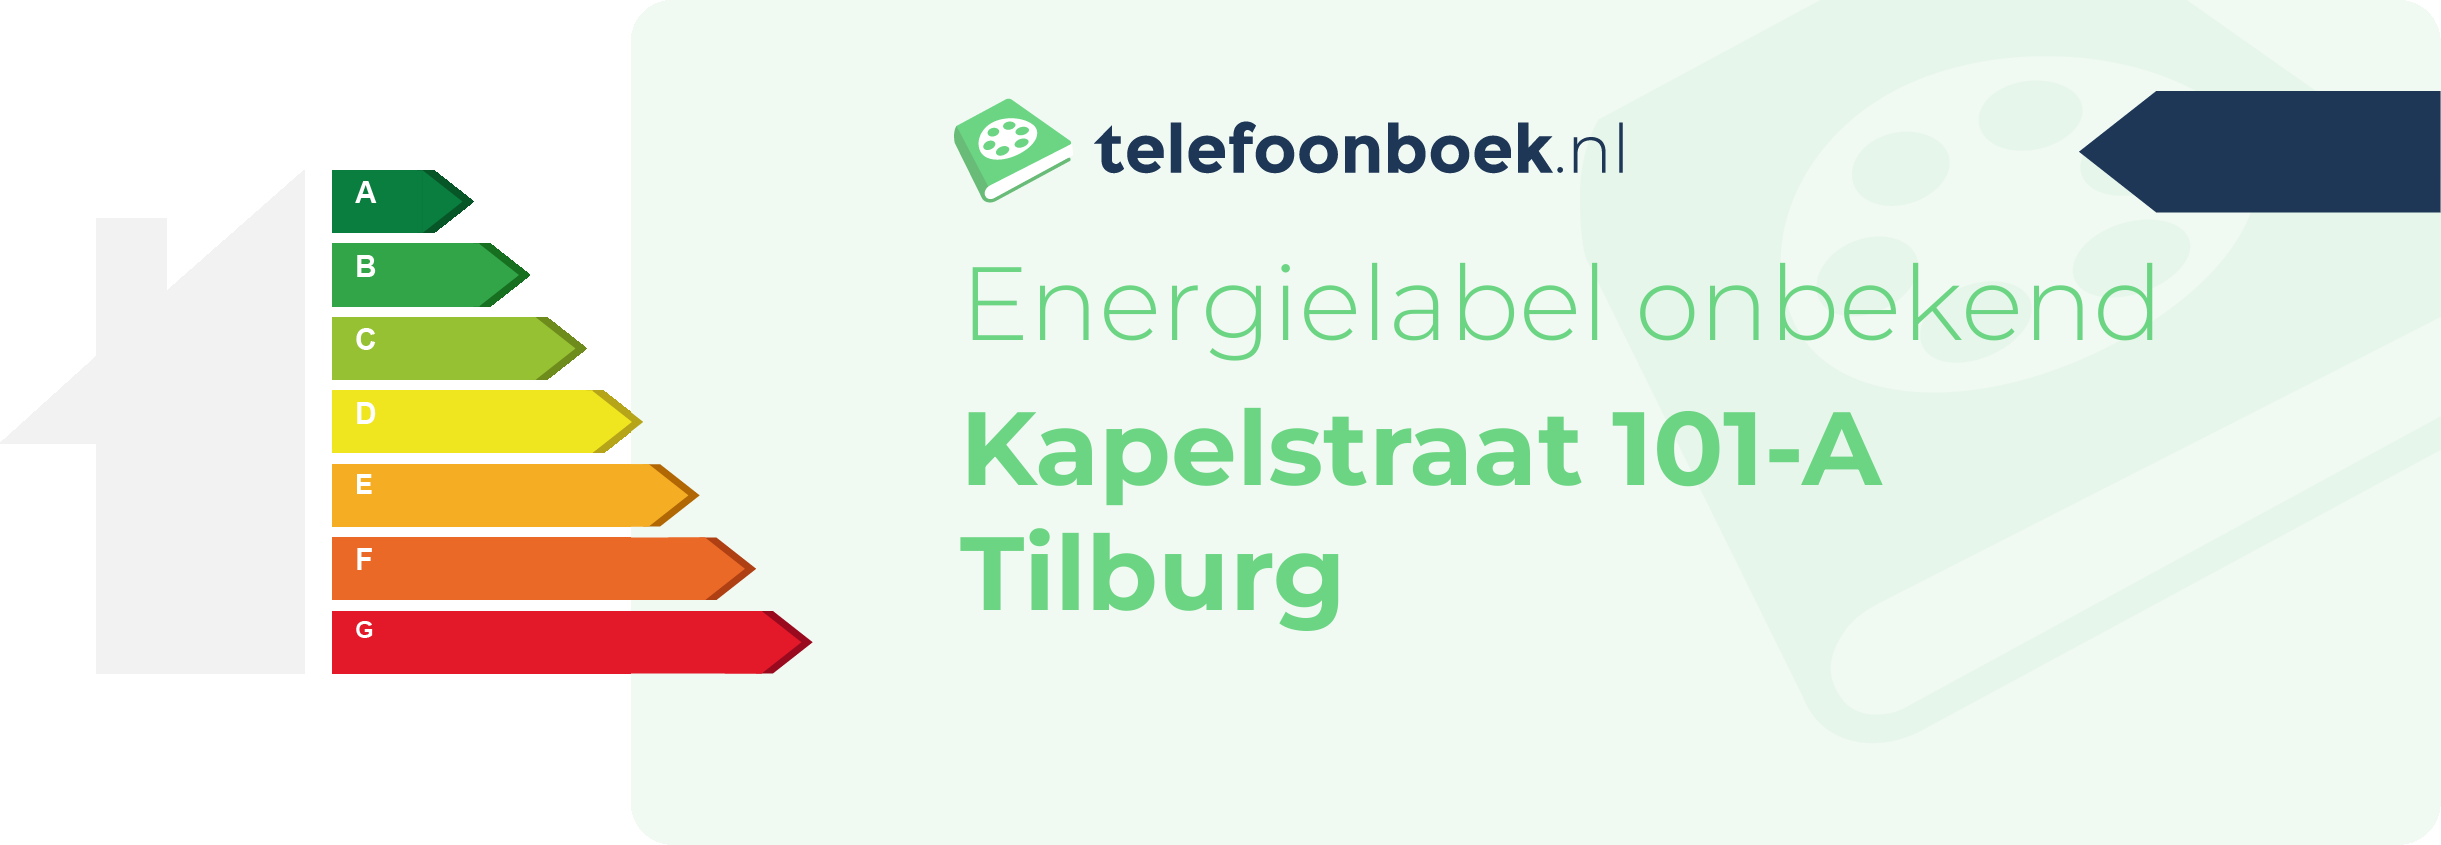 Energielabel Kapelstraat 101-A Tilburg